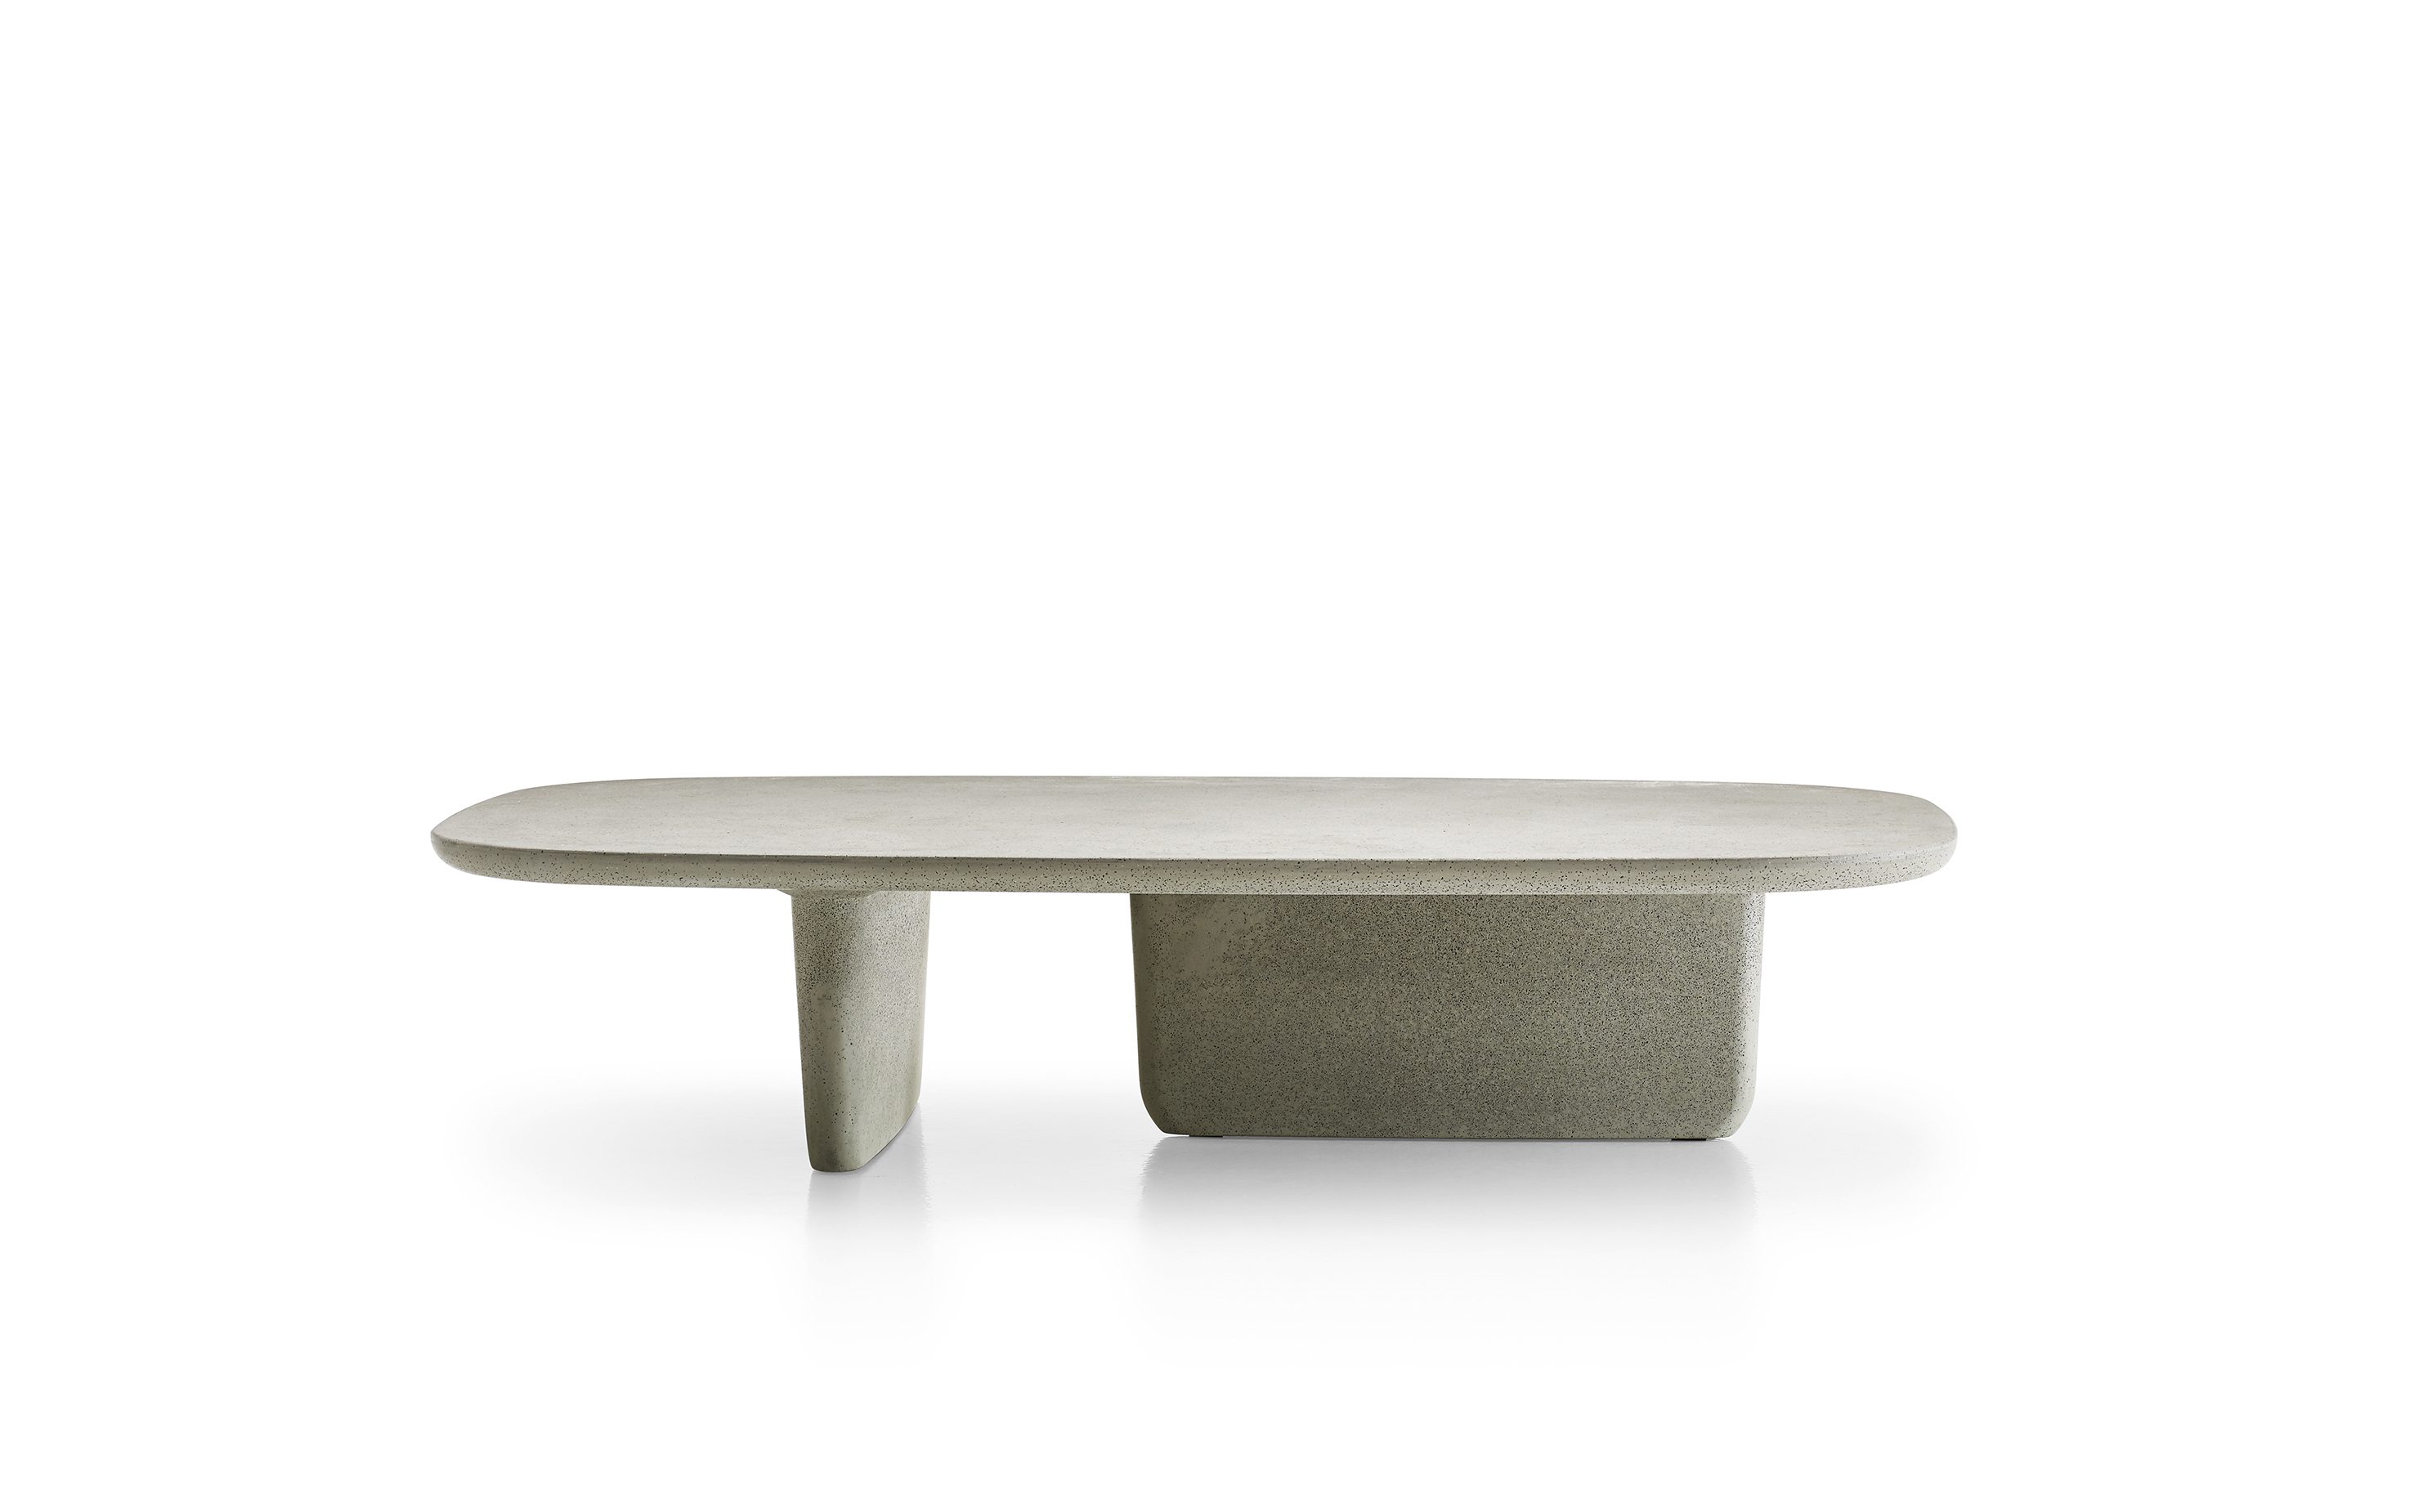 B&B italia design 2018, “topi-ishi”, table basse en ciment grise ou anthracite.